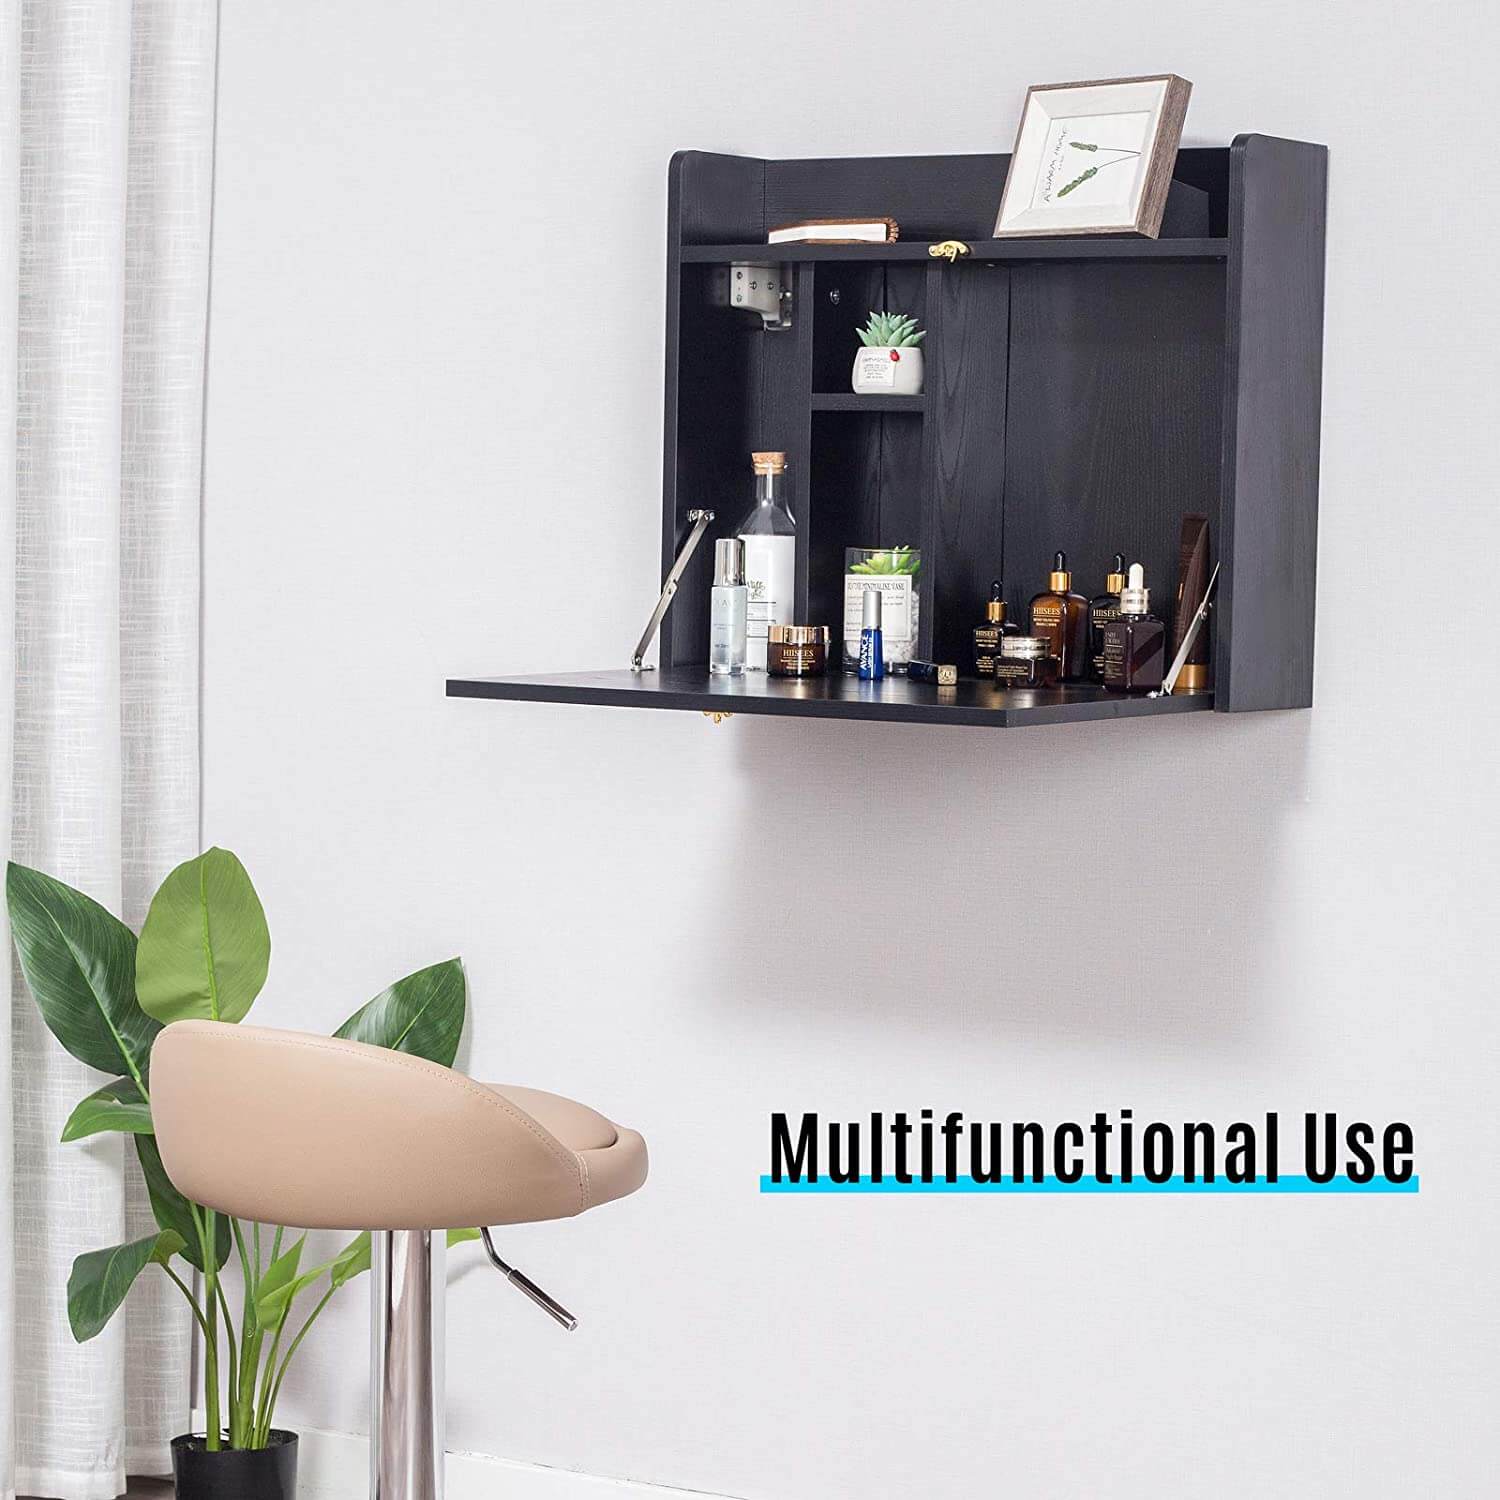 Elecwish Black Wall Mounted Table Foldable Storage Shelf Wall-Mounted Desk HW1138 can multifunctional use